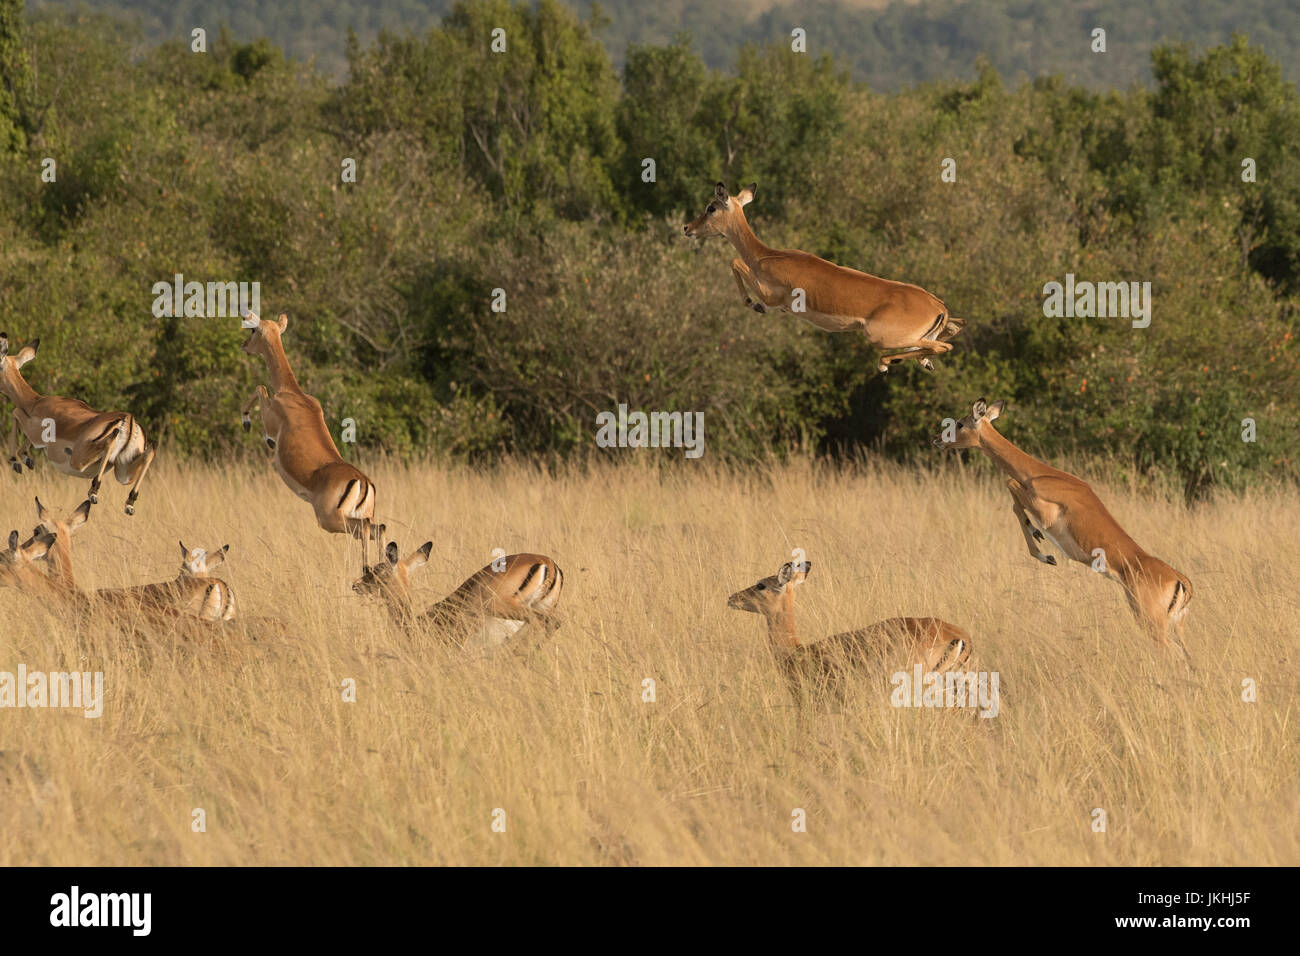 Frightened impala antelopes jumping and prancing in the Masai Mara in Kenya Stock Photo